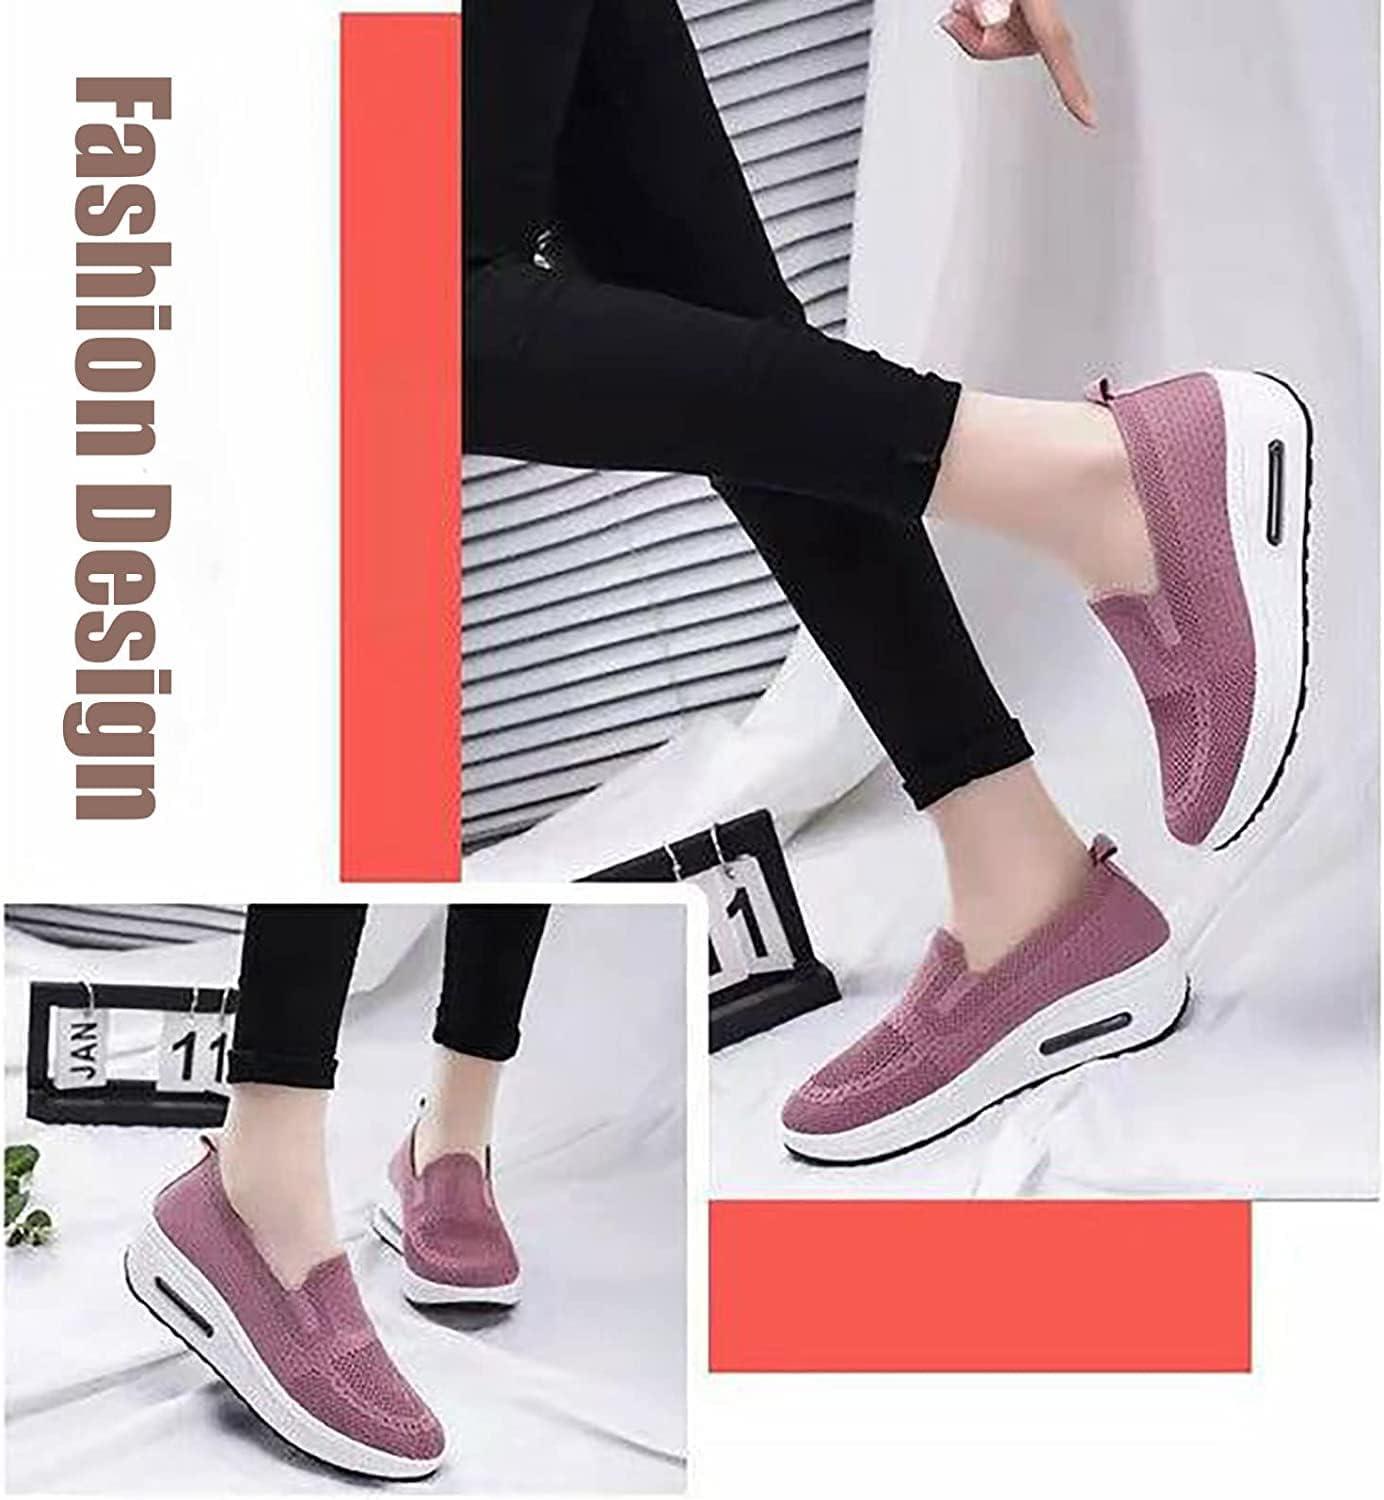 Ladies Walking Shoes Sale Clearance Air Cushion Slip-on Orthopedic